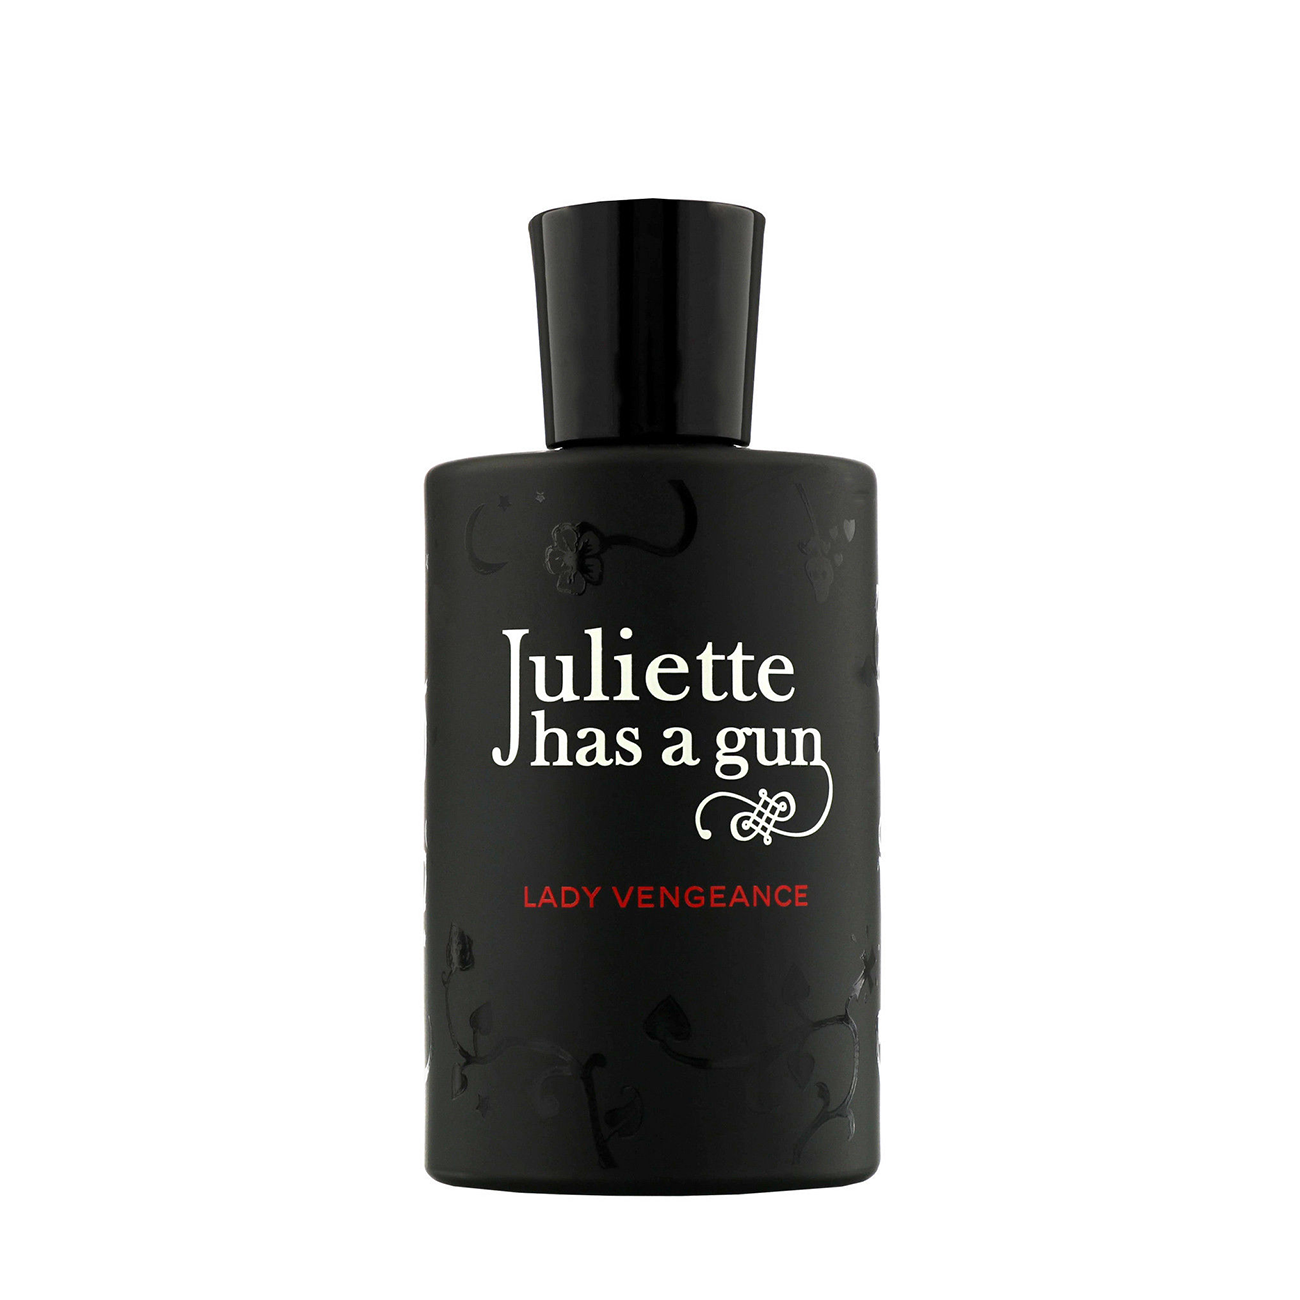 Parfum de niche Juliette has a gun LADY VENGEANCE 100ml cu comanda online